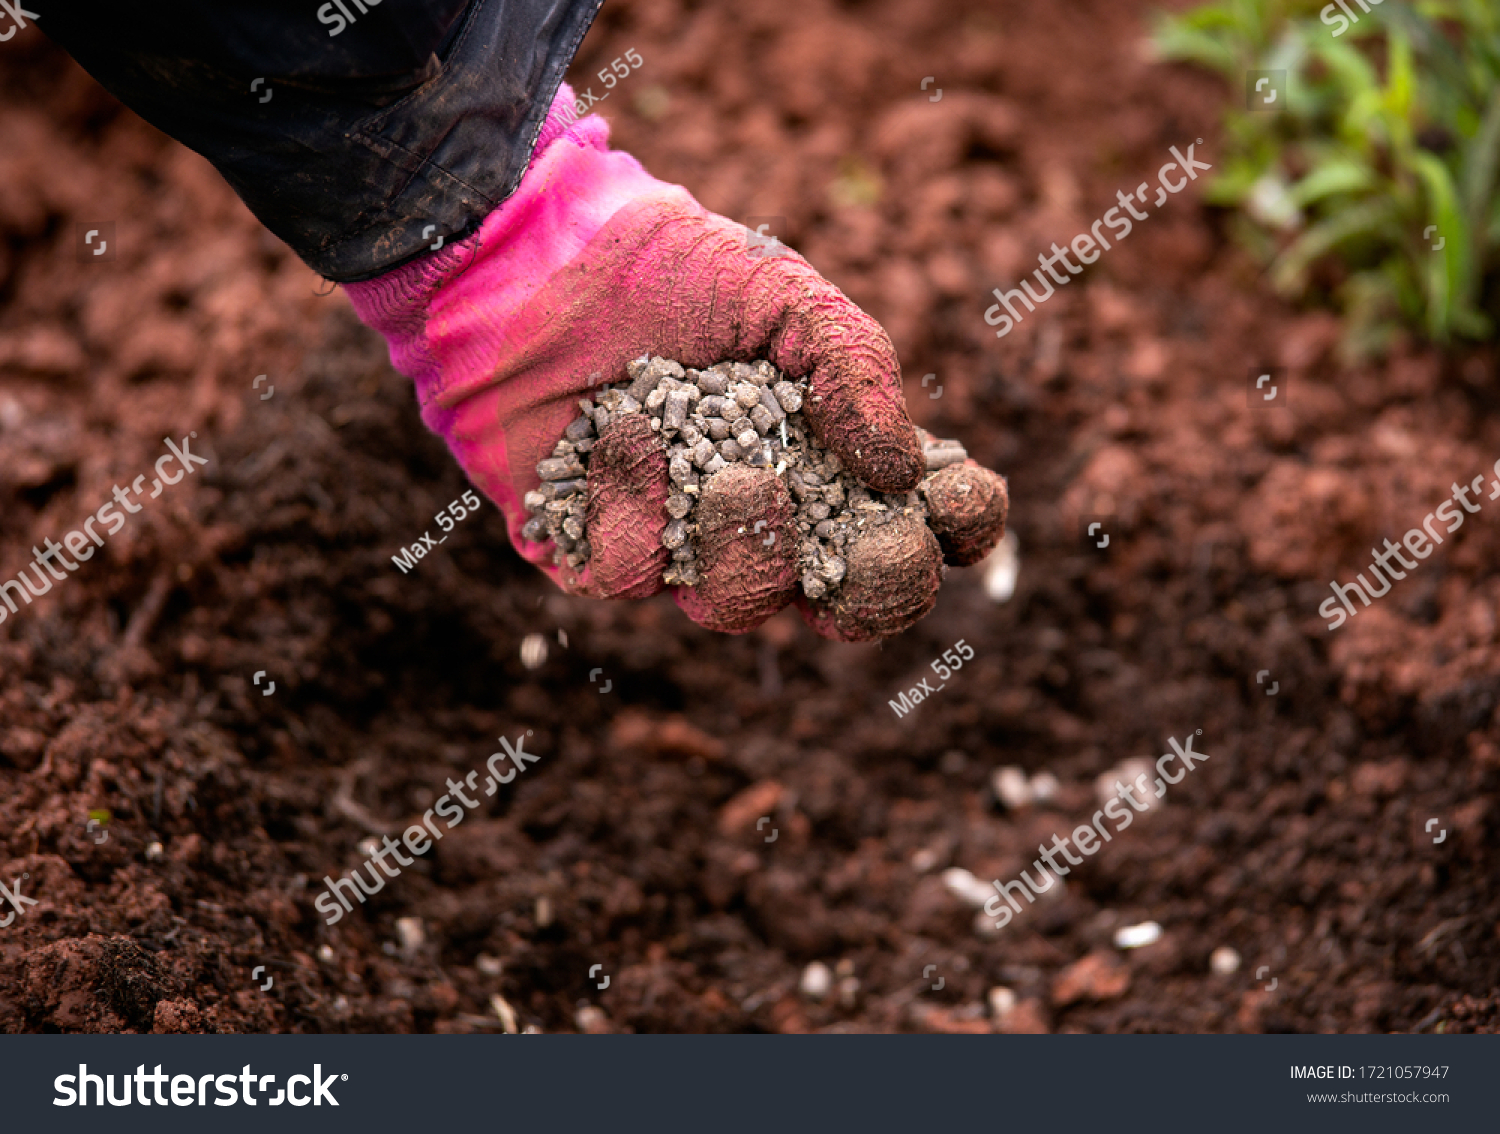 Gardener adding chicken manure pellets to soil ground for planting in garden #1721057947